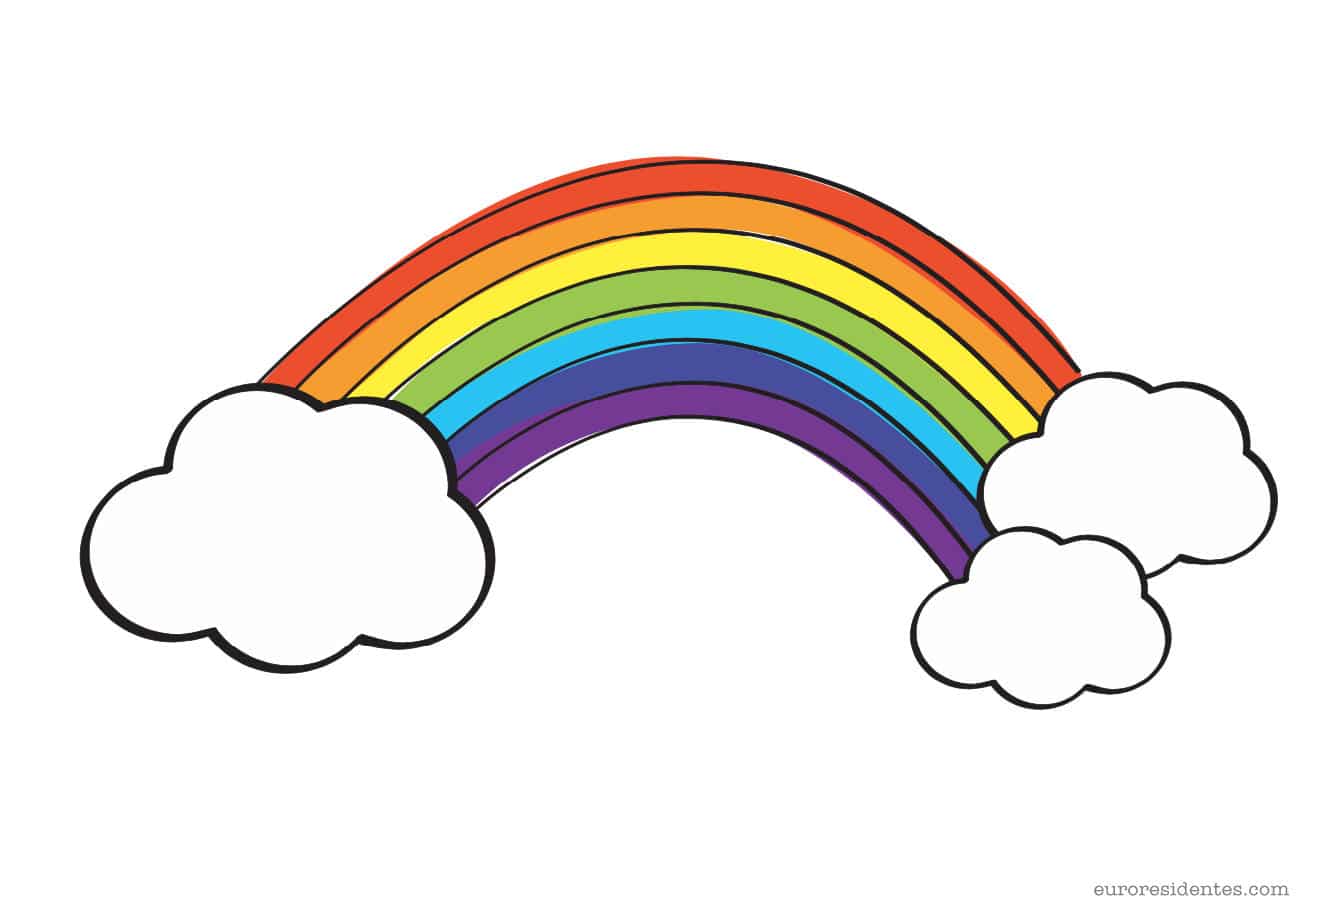 Dibujo de arco iris - Manualidades